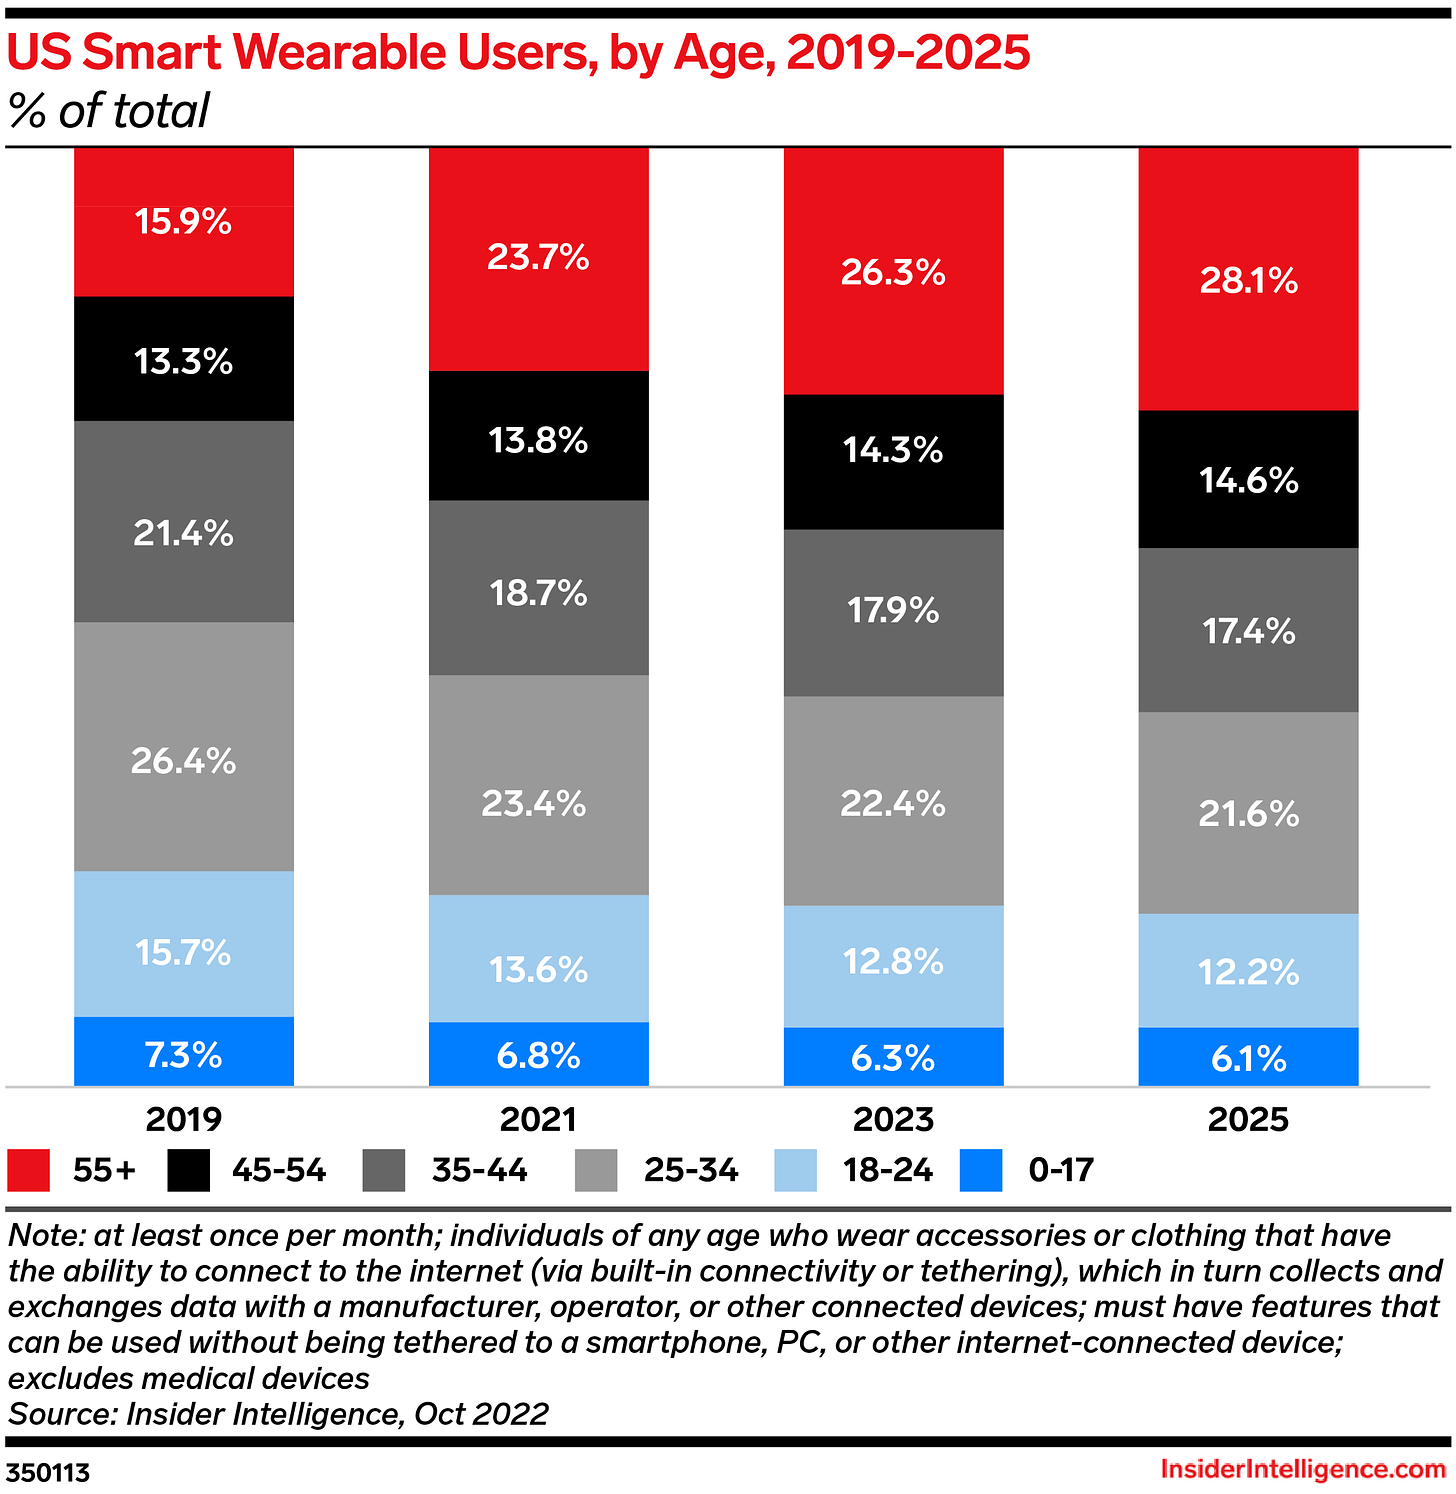 The smart wearables market is growing older